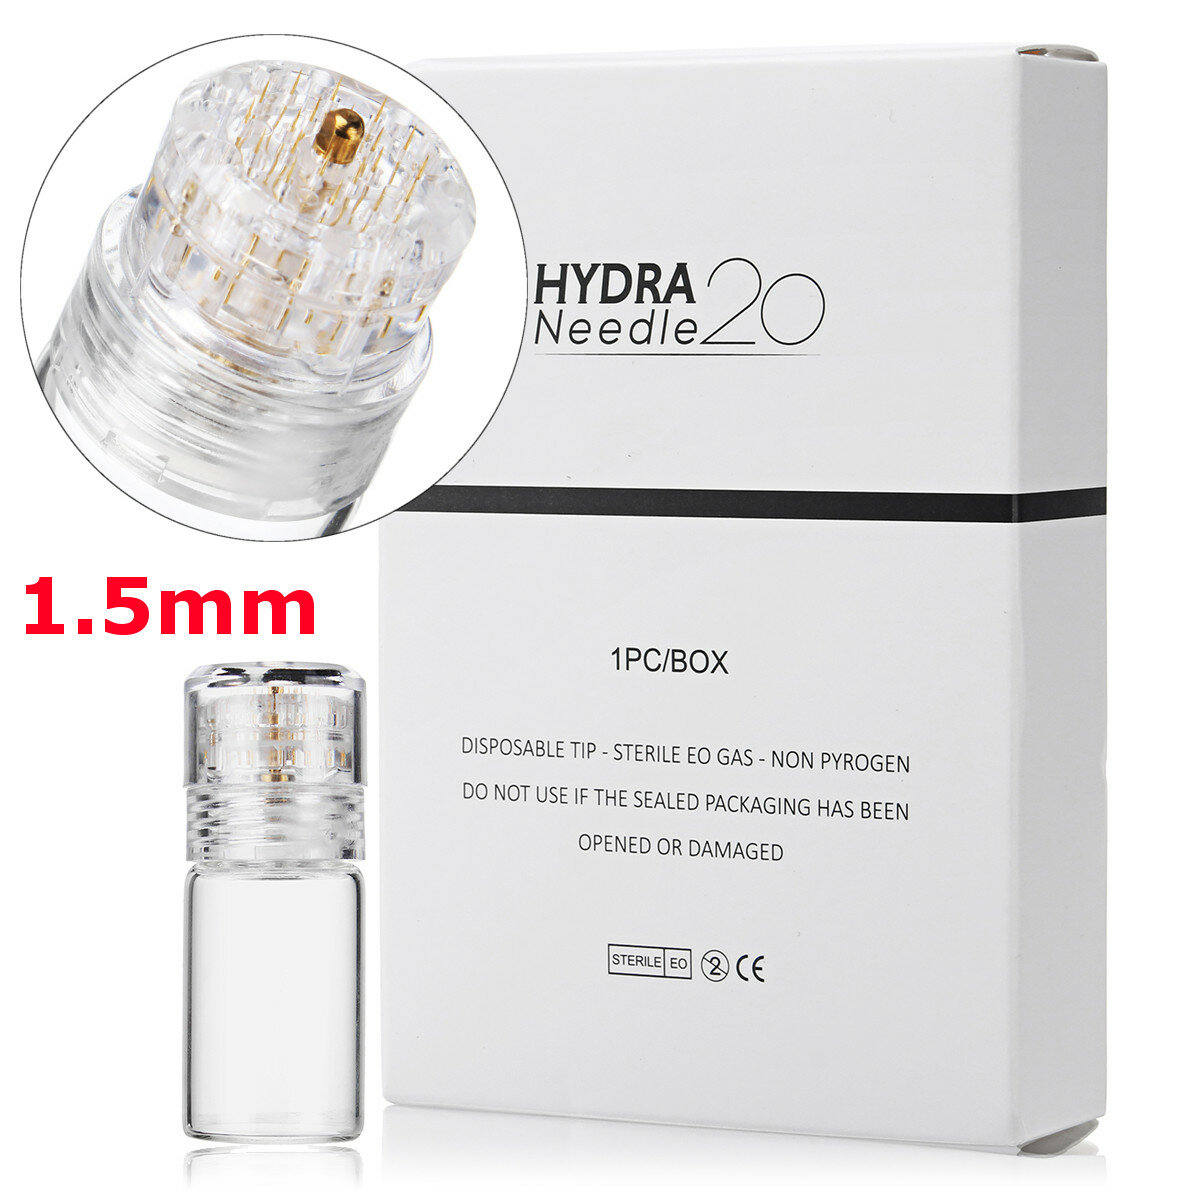 Hydra 20 Titanium Microneedle Applicator Bottle